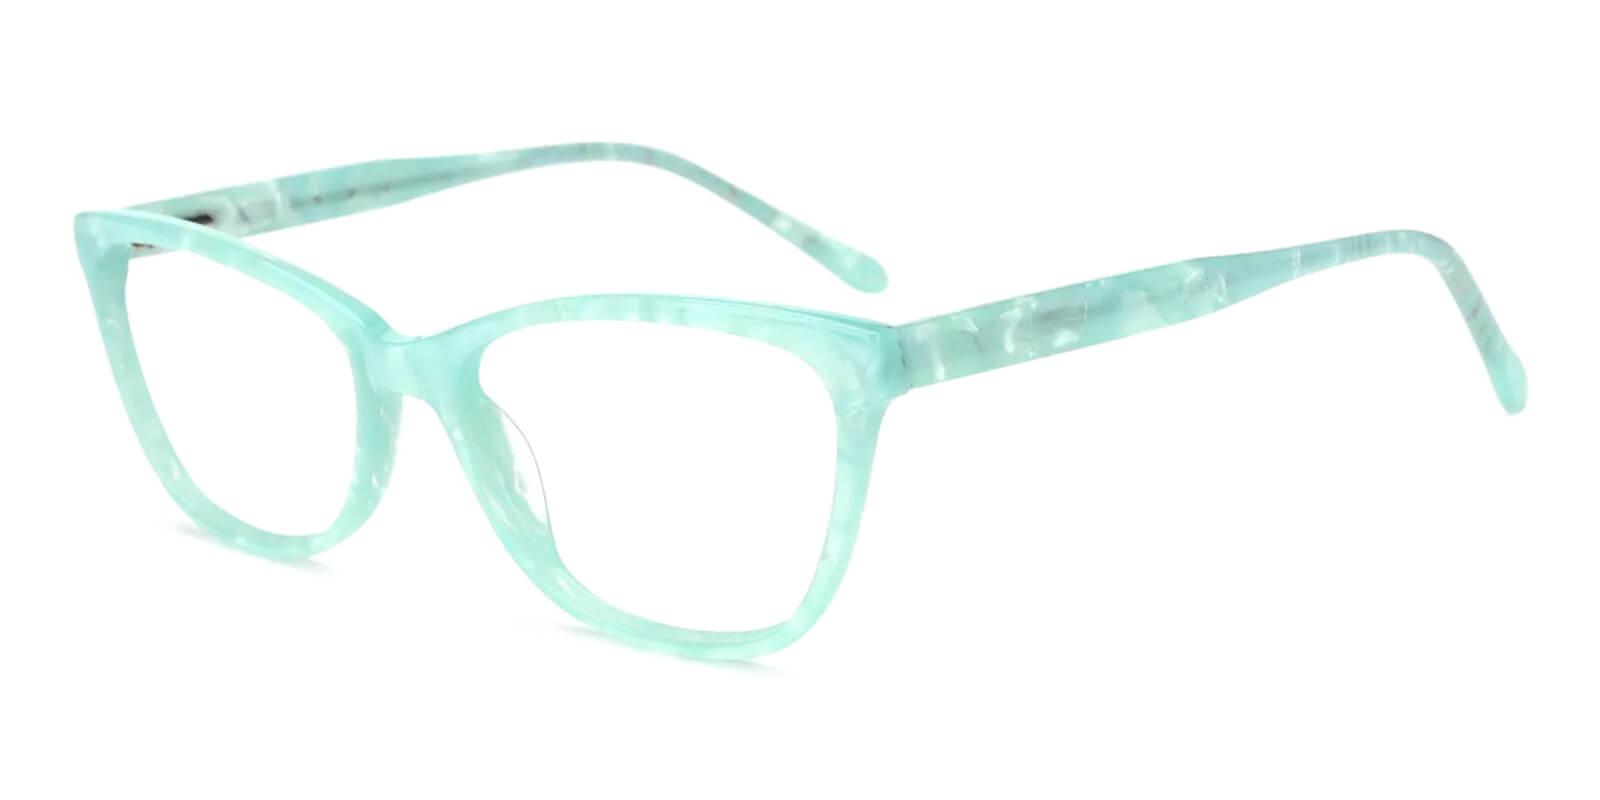 Spindan Green Acetate Eyeglasses , Fashion , SpringHinges , UniversalBridgeFit Frames from ABBE Glasses